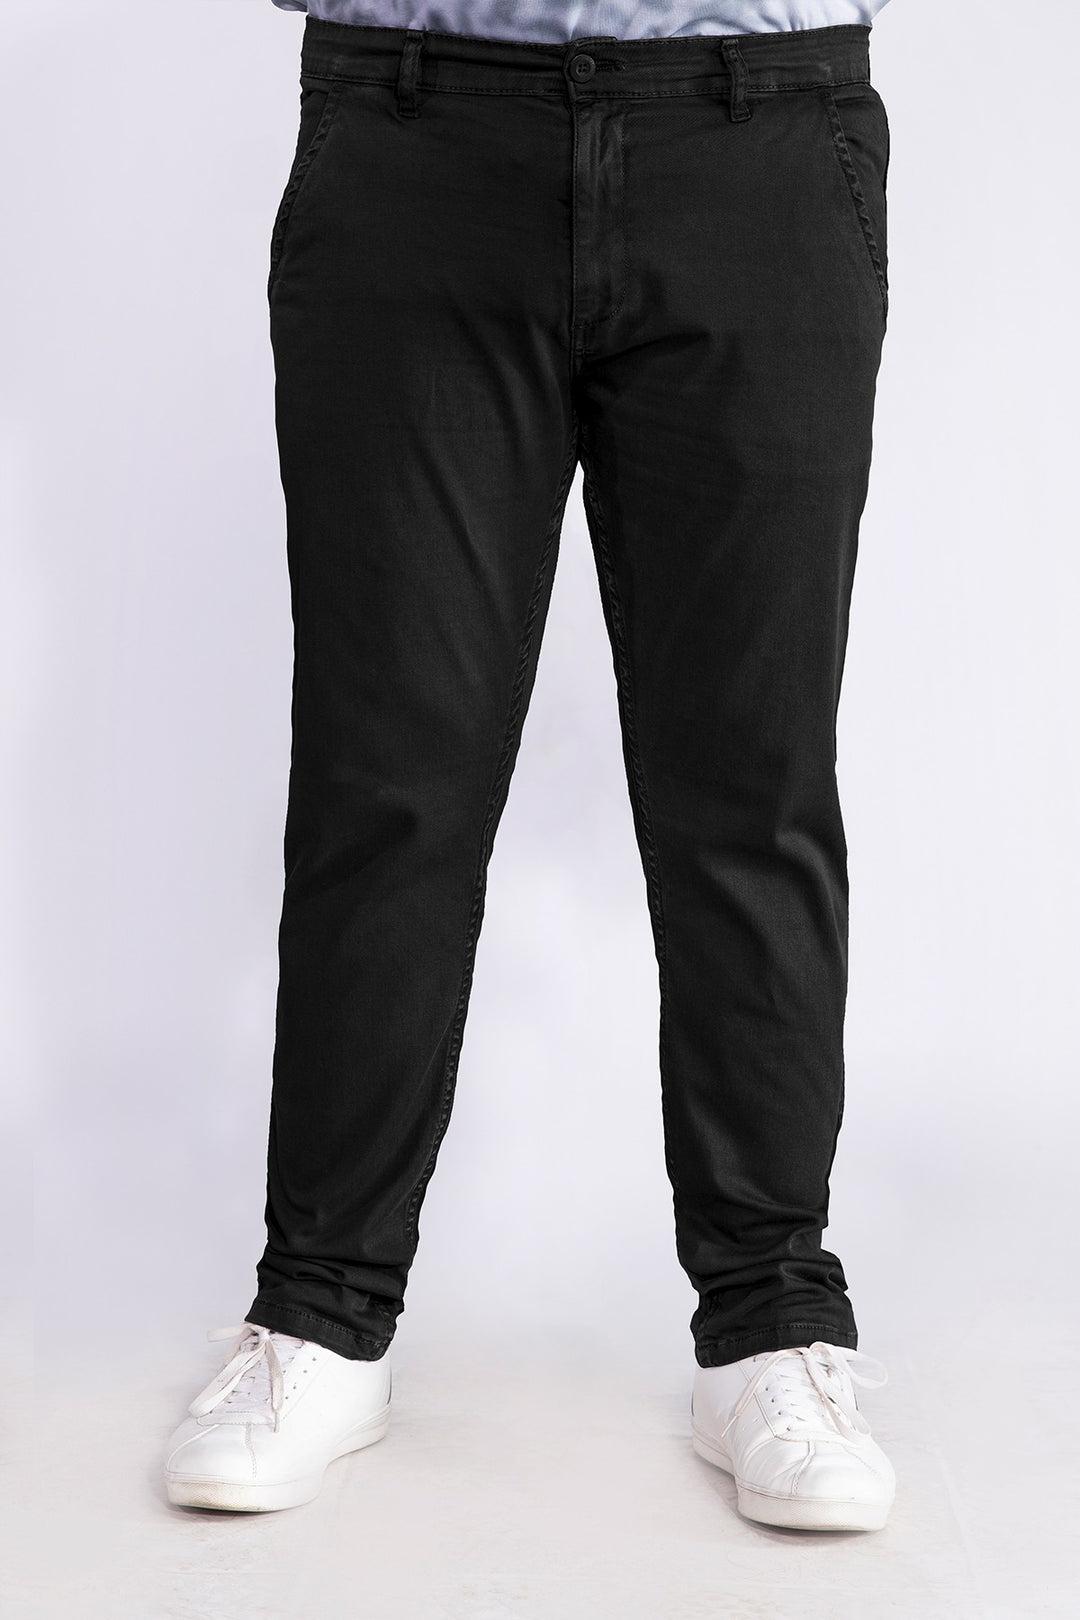 Slim Fit Black Stretchy Chinos (Plus size) - W21 - MC0006P